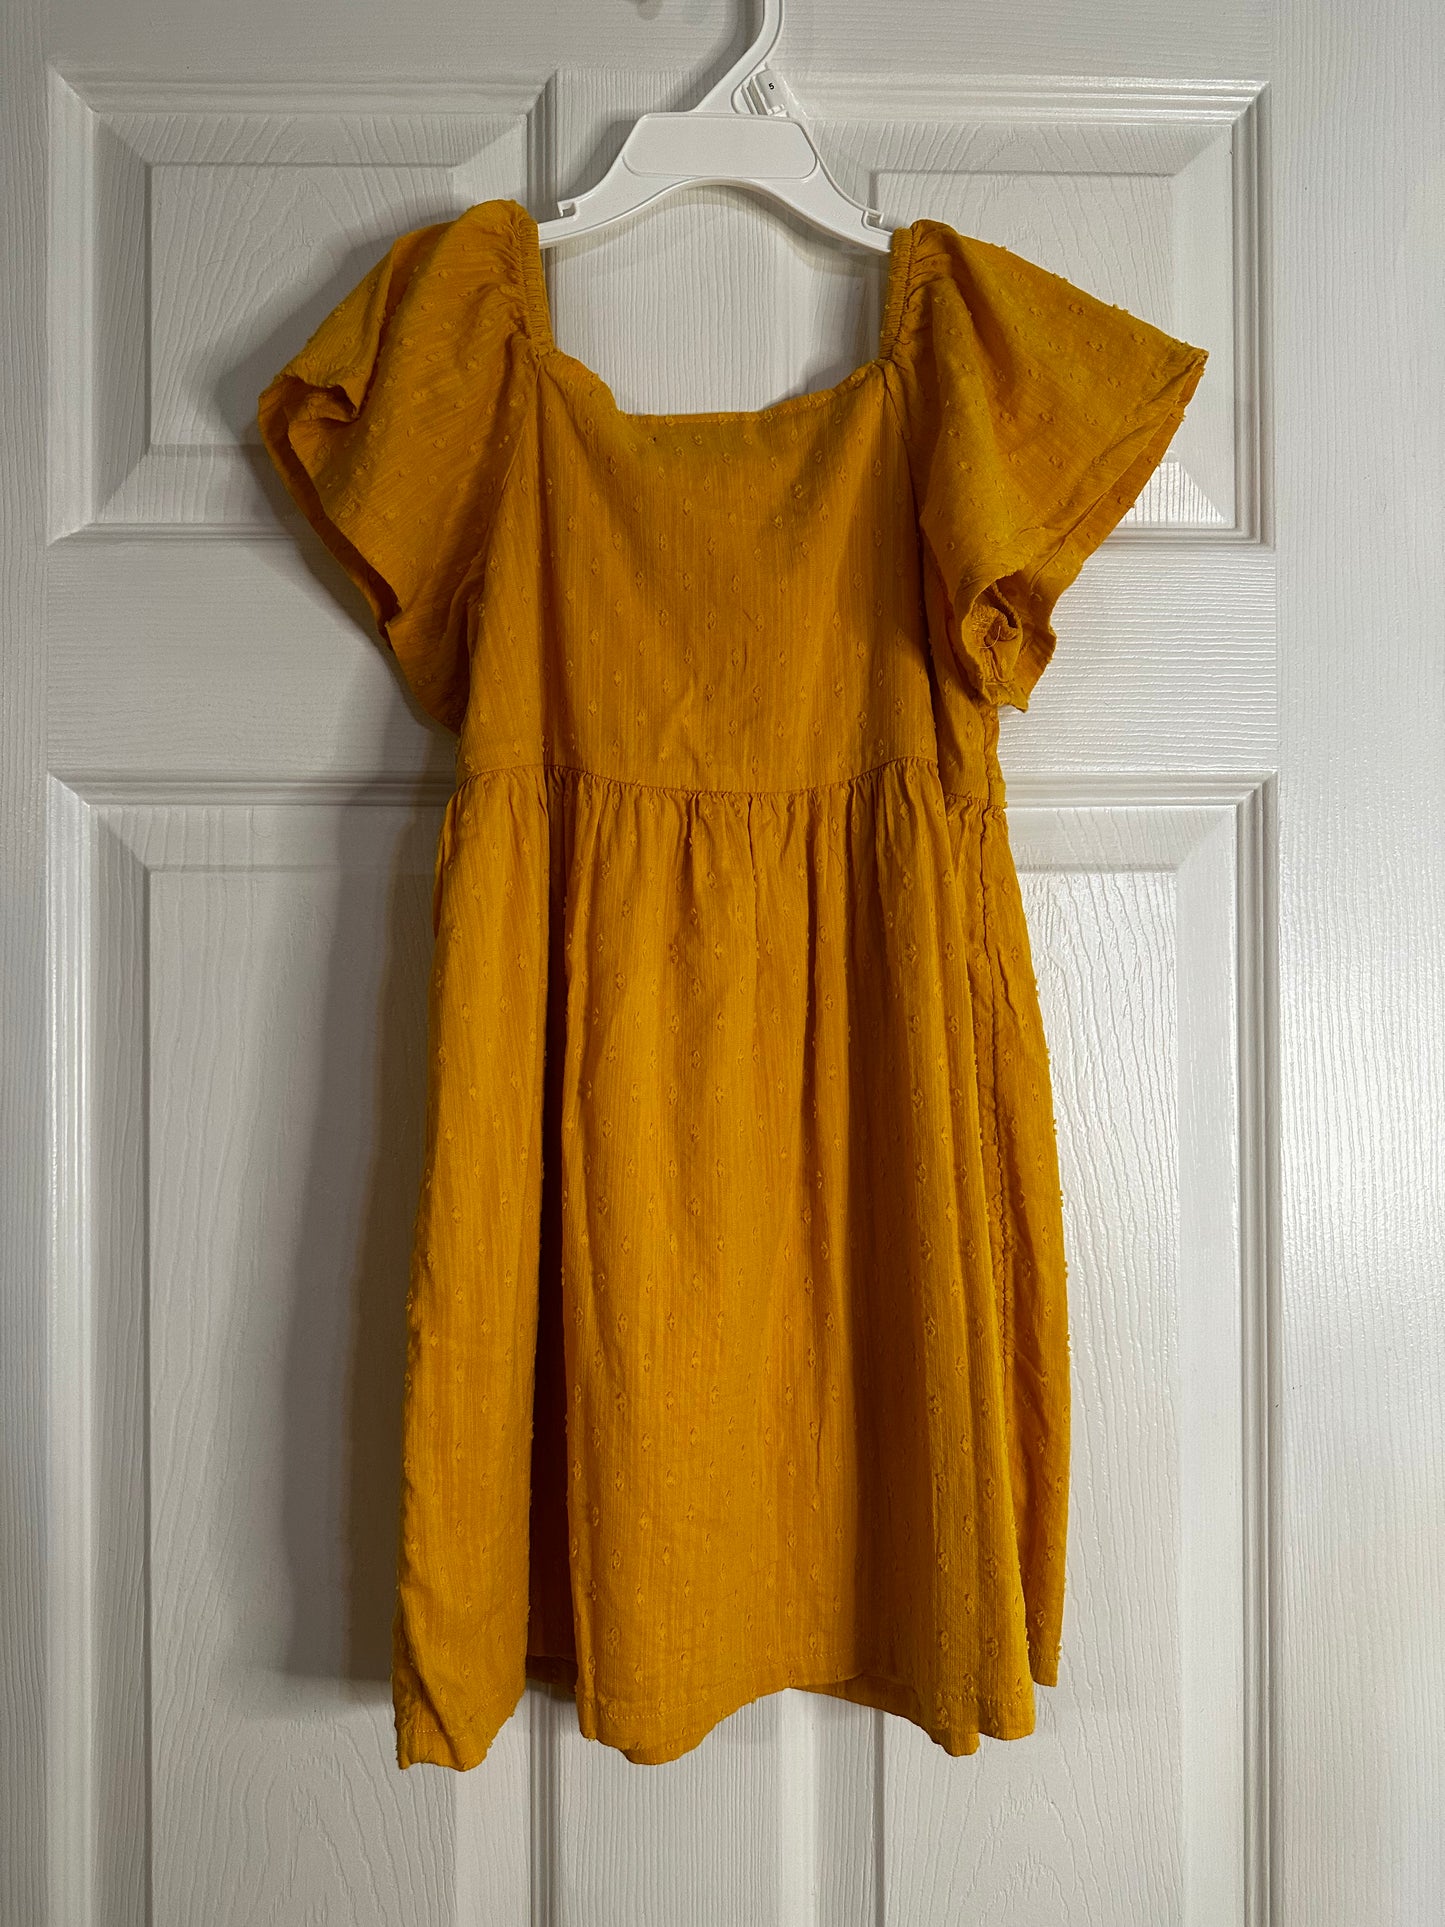 Girl's Size 5 Dress- NWT